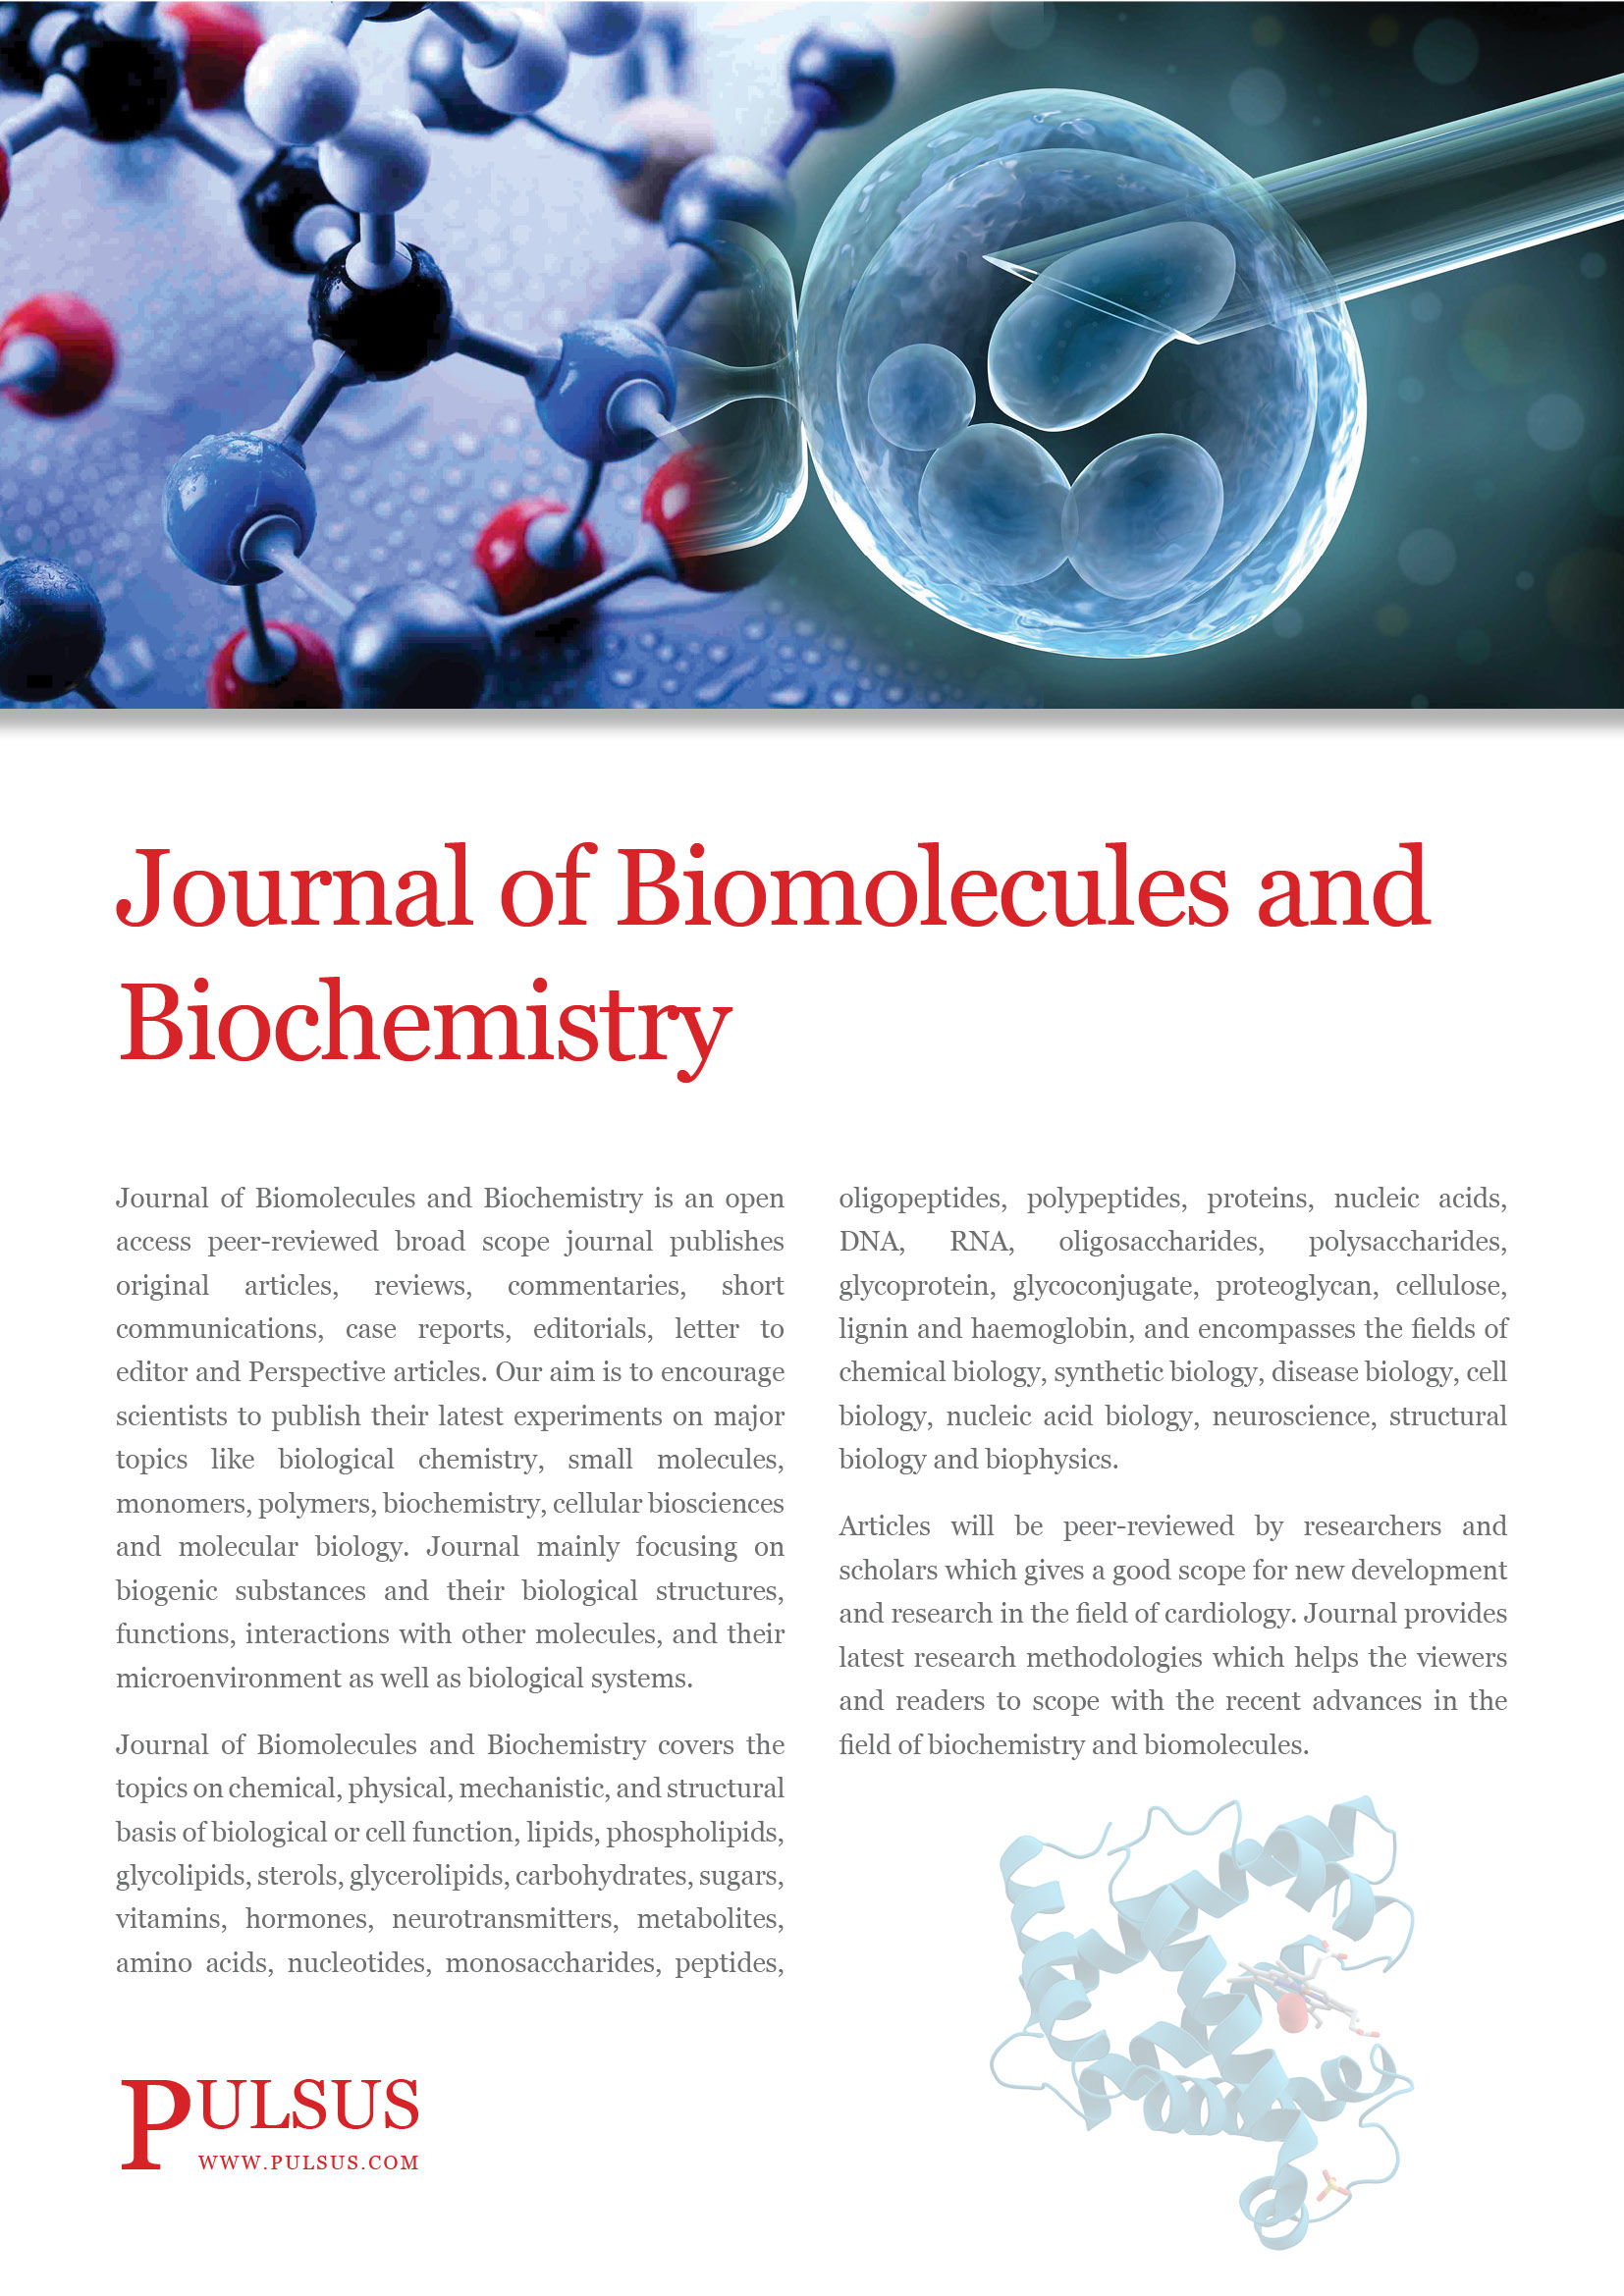 Journal of Biomolecules and Biochemistry